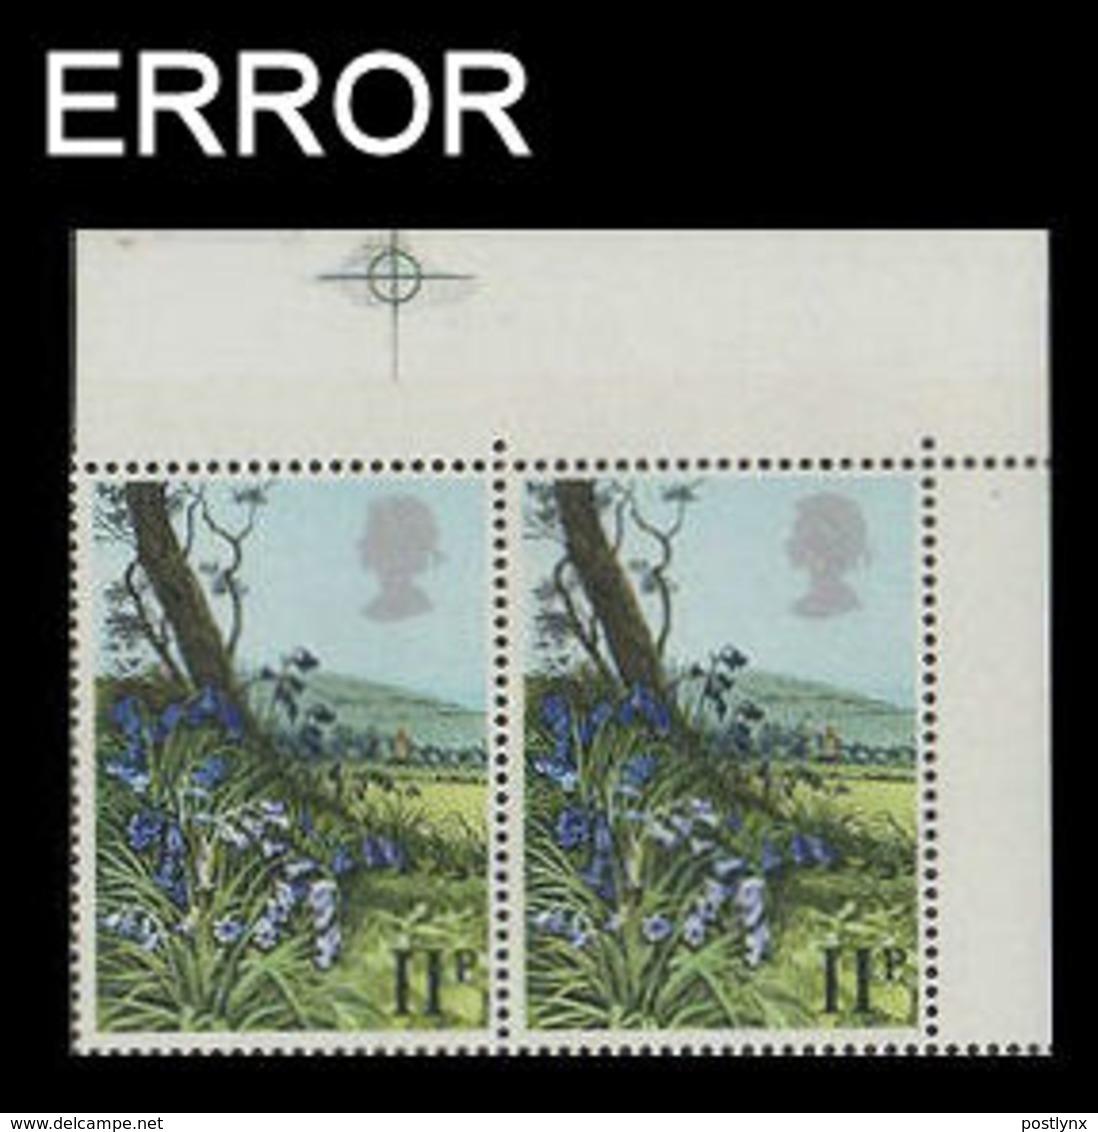 Great Britain 1980 Flowers Bluebell 11p CORNER PAIR ERROR: Queens Head Left - Errors, Freaks & Oddities (EFOs